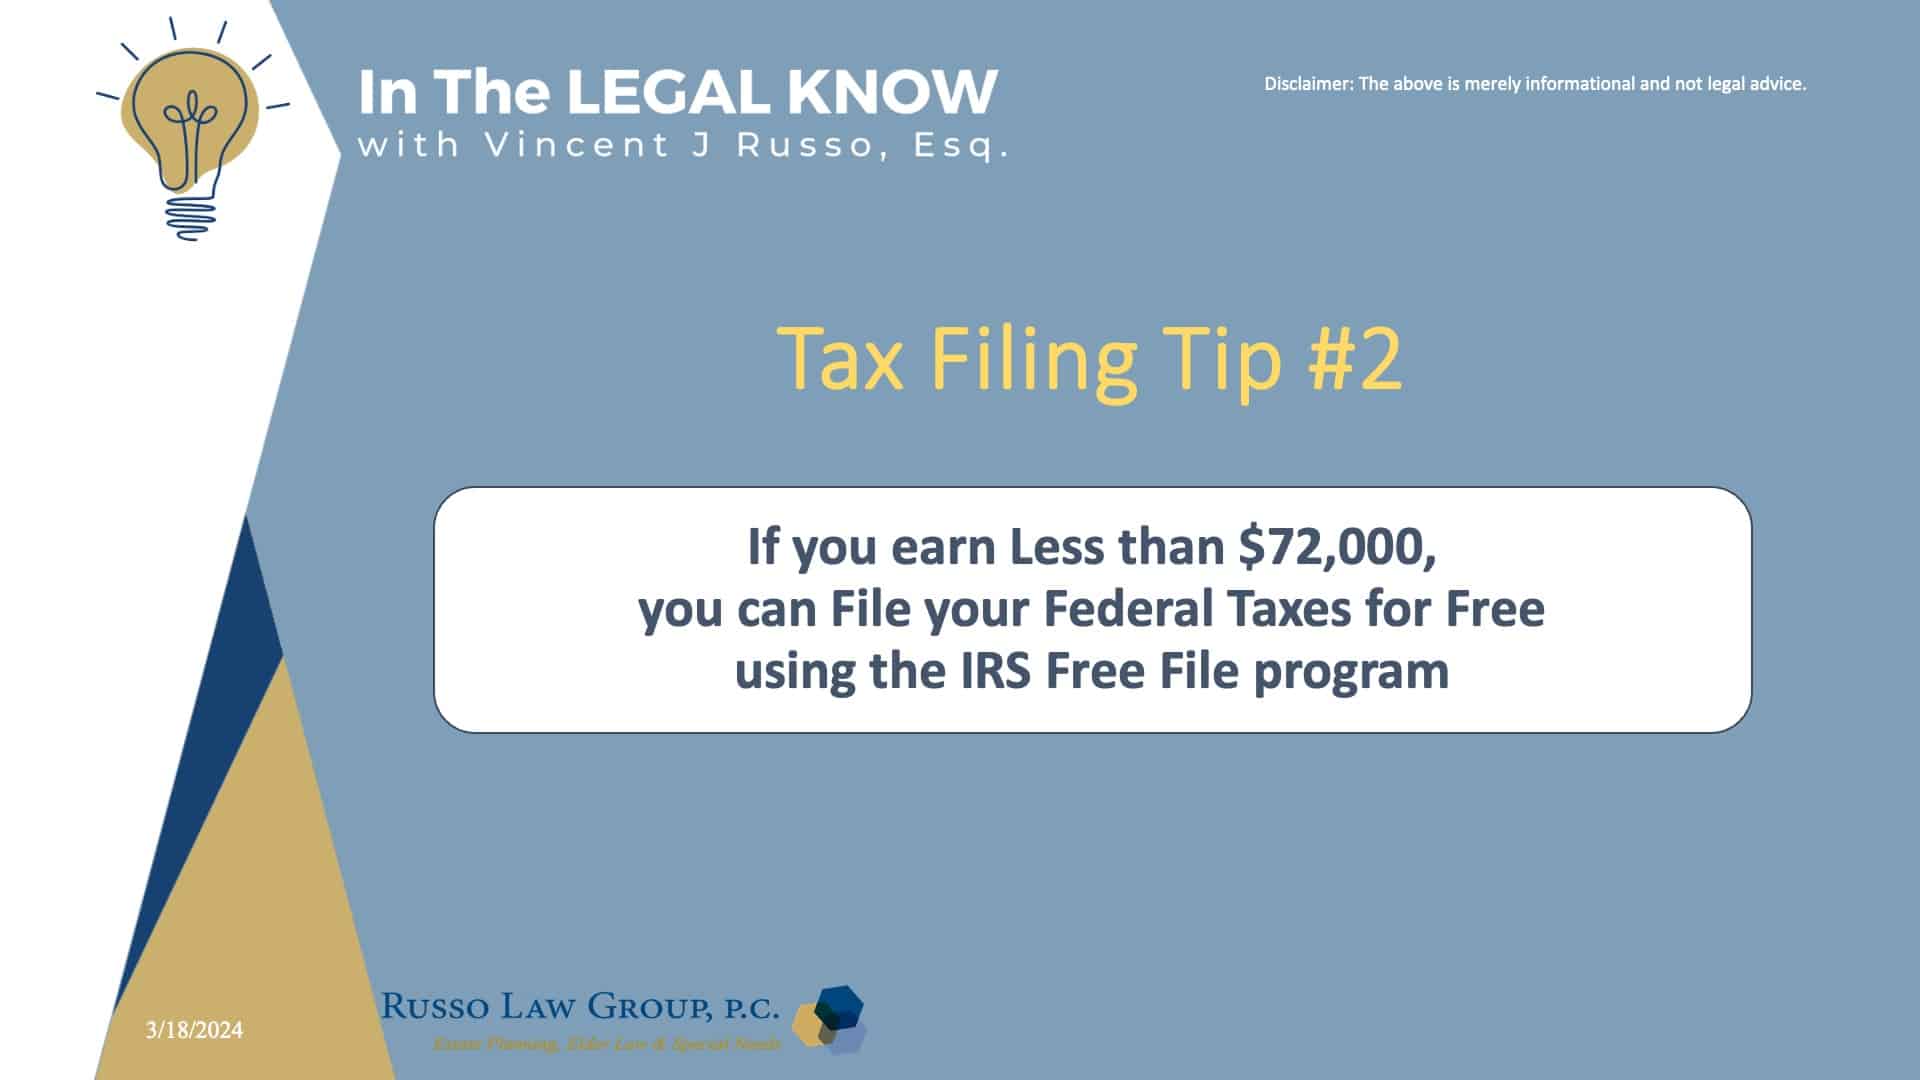 Tax Filing Tip #2